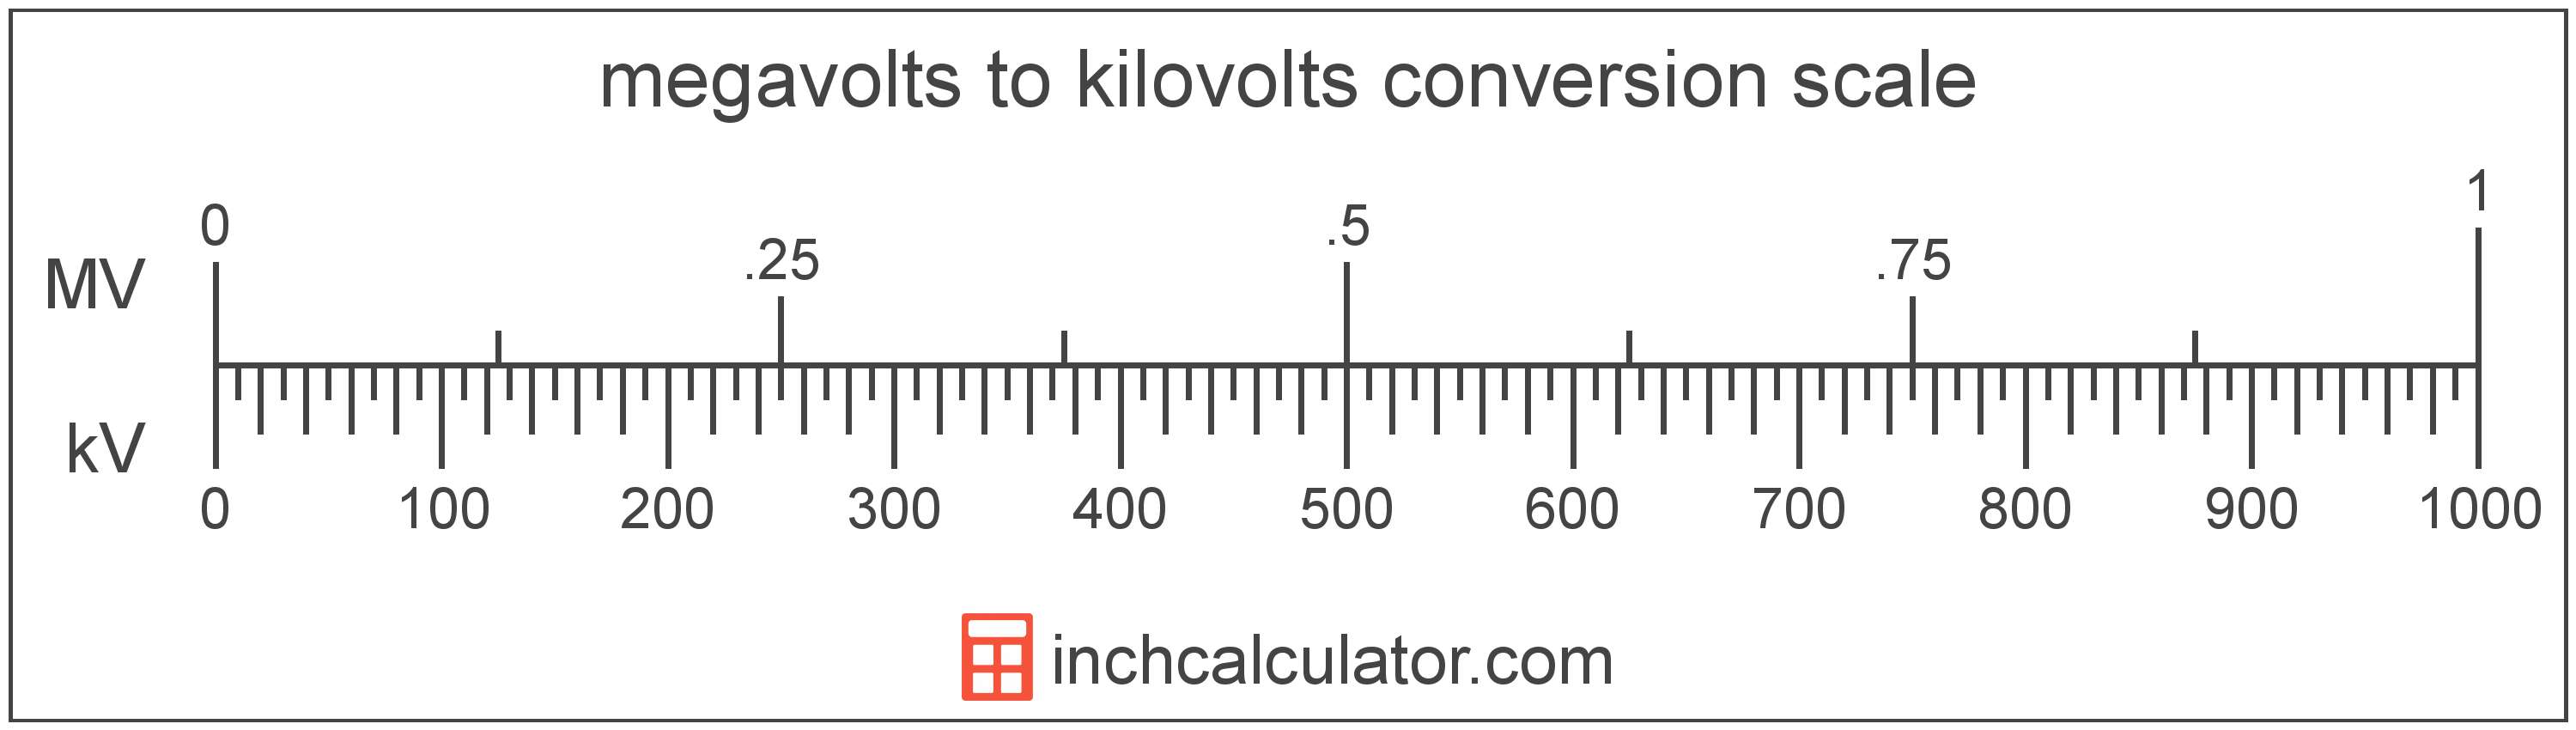 conversion scale showing kilovolts and equivalent megavolts voltage values